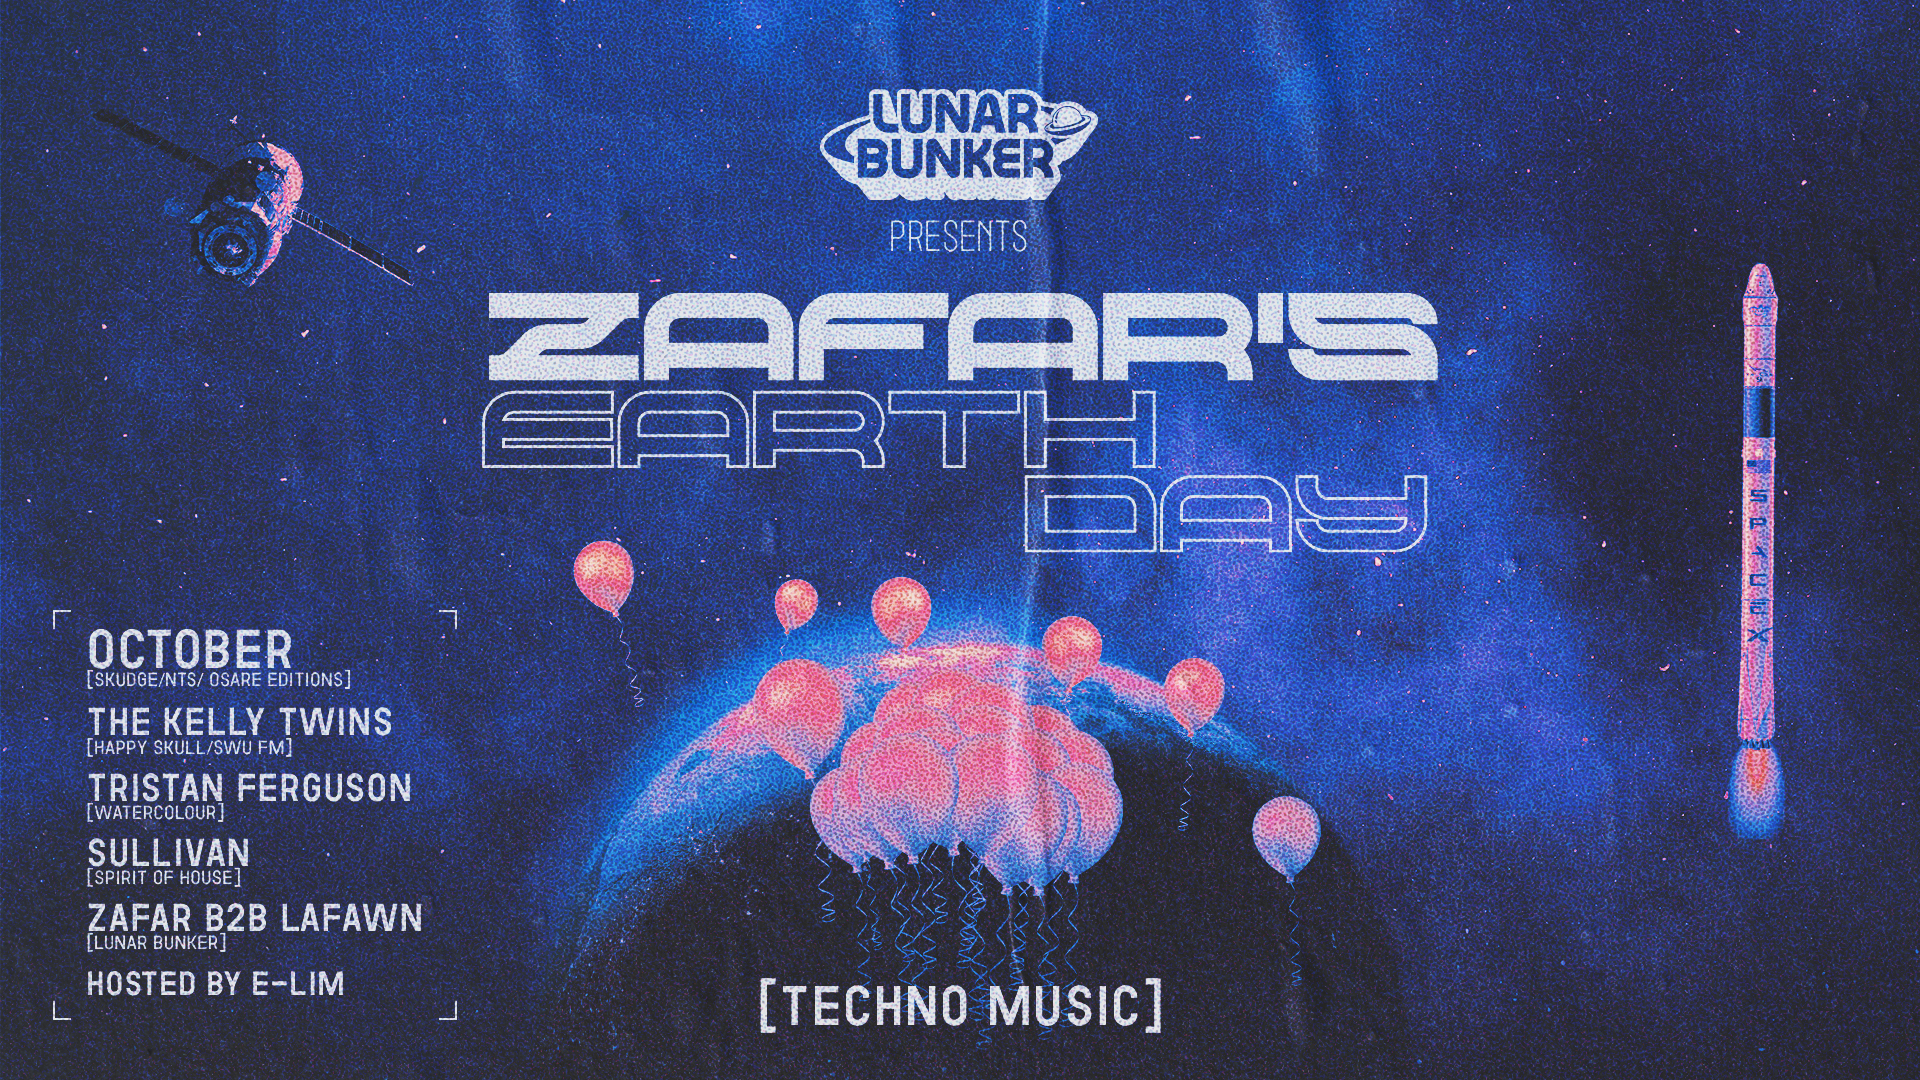 Lunar Bunker presents Zafars Earth Day - Página trasera